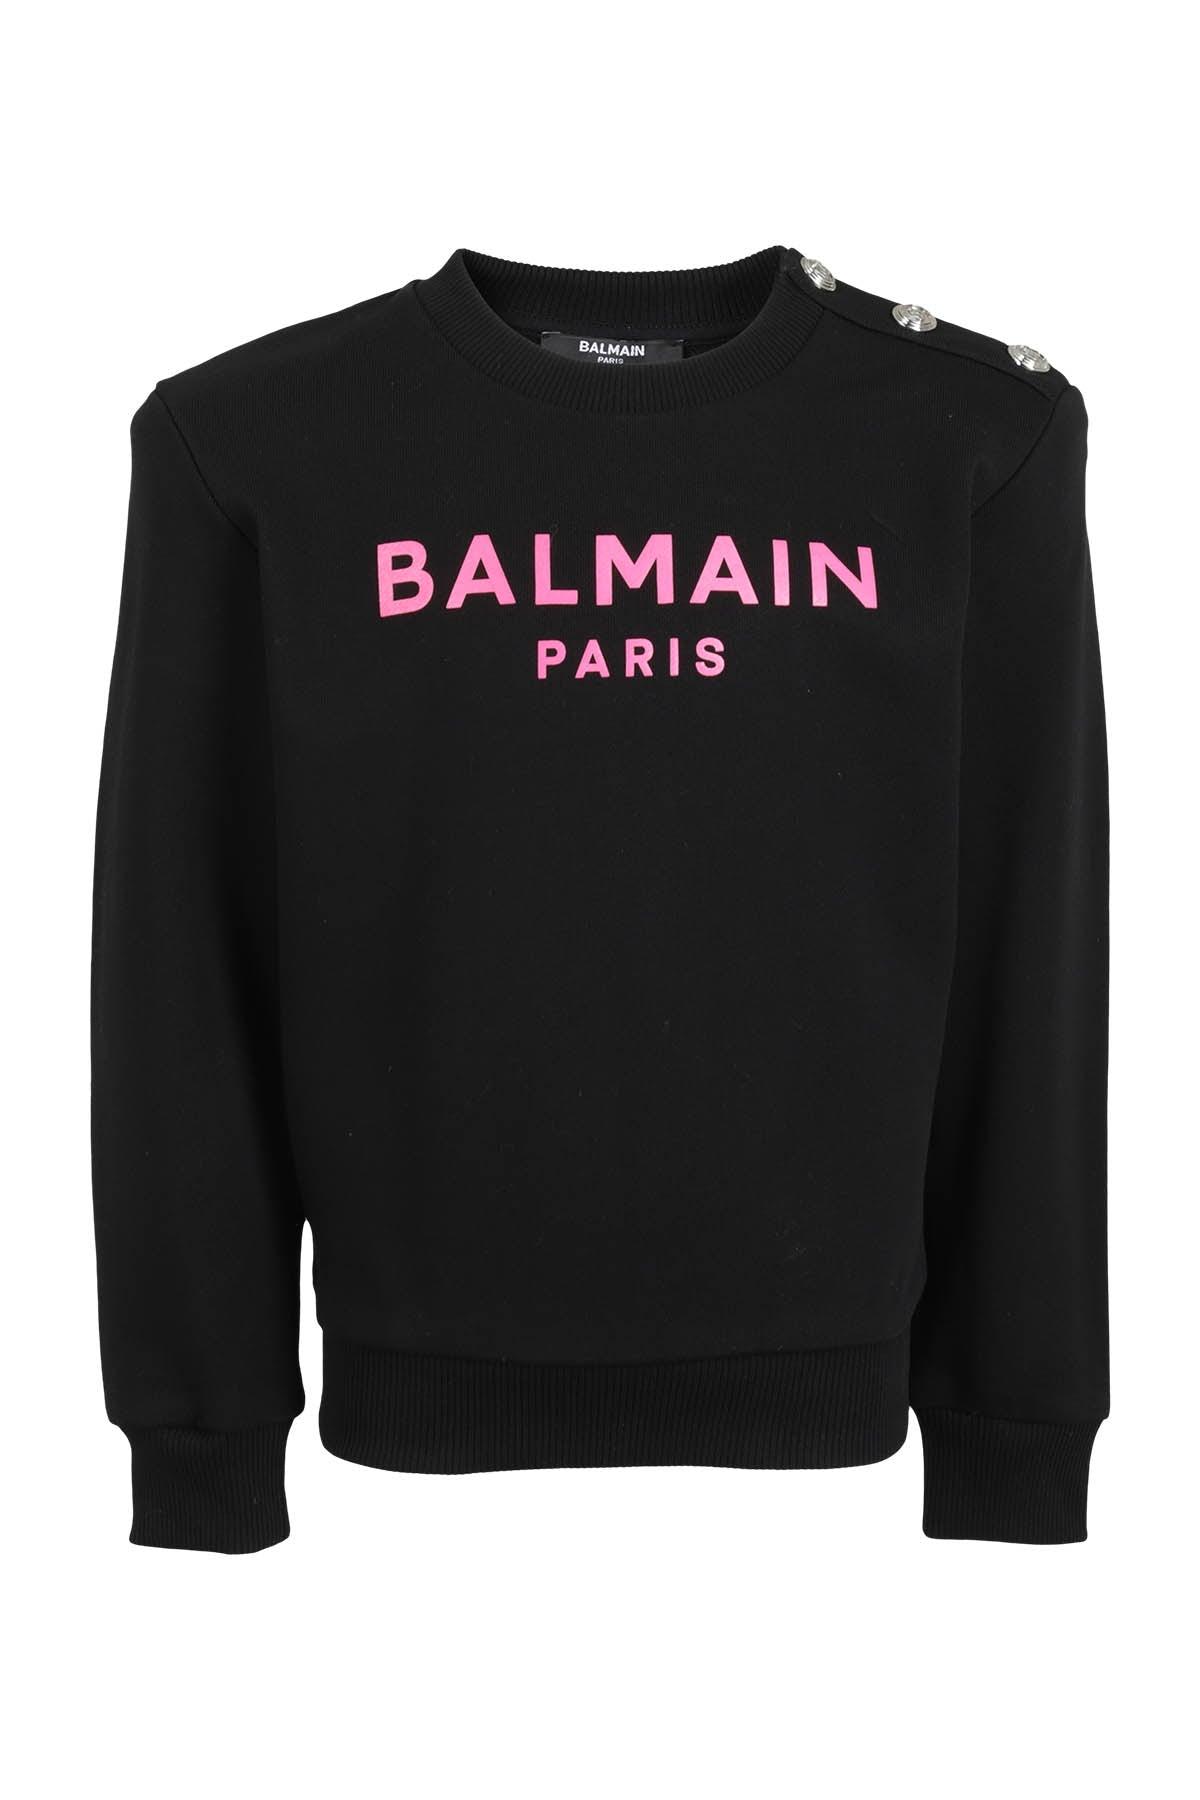 Balmain logo printed crewneck sweatshirt